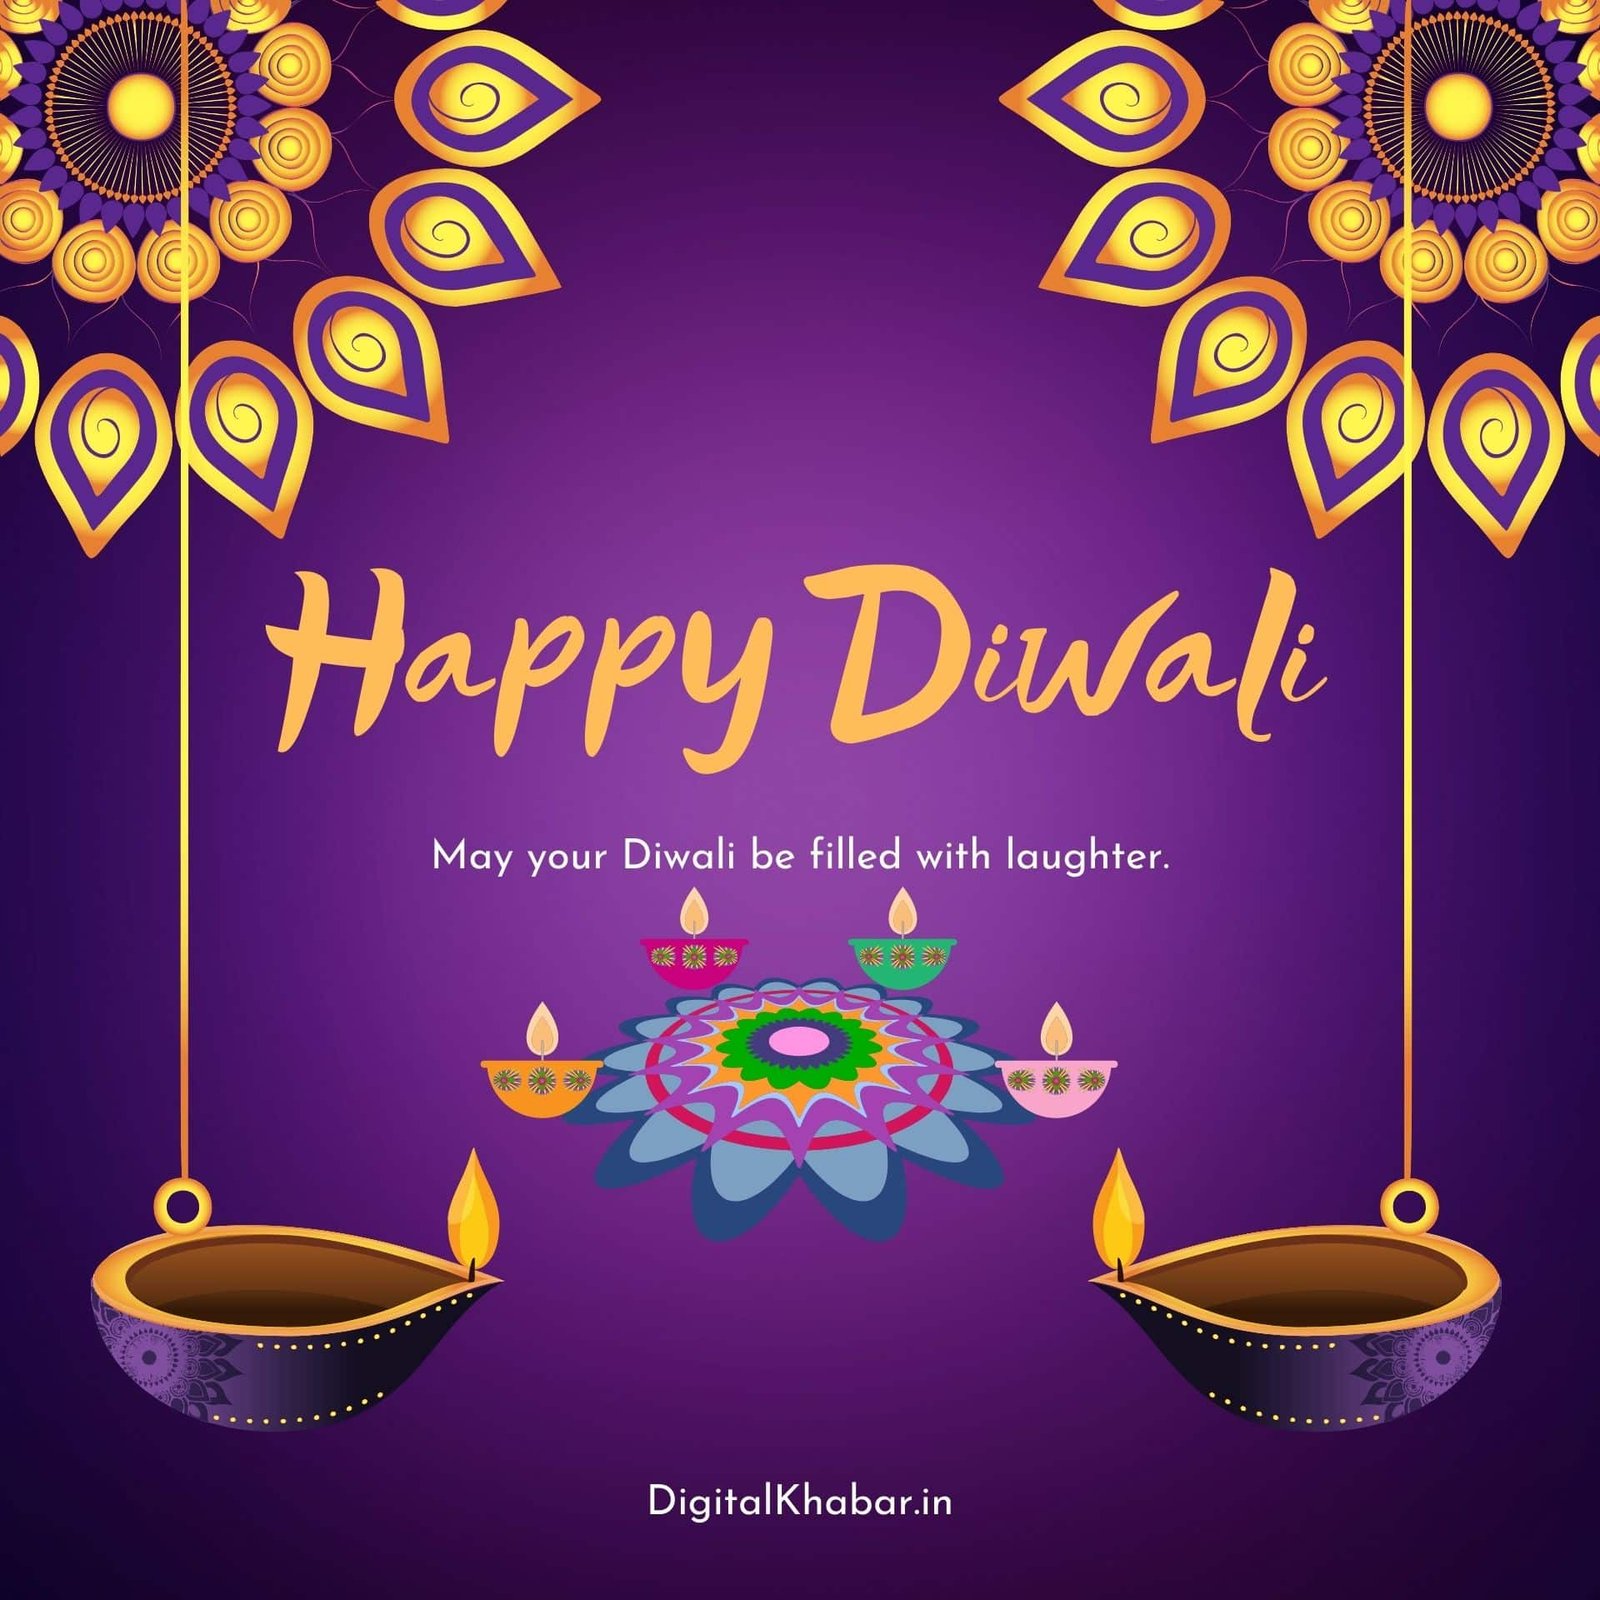 100+ New Happy Diwali Images for Whatsapp Status